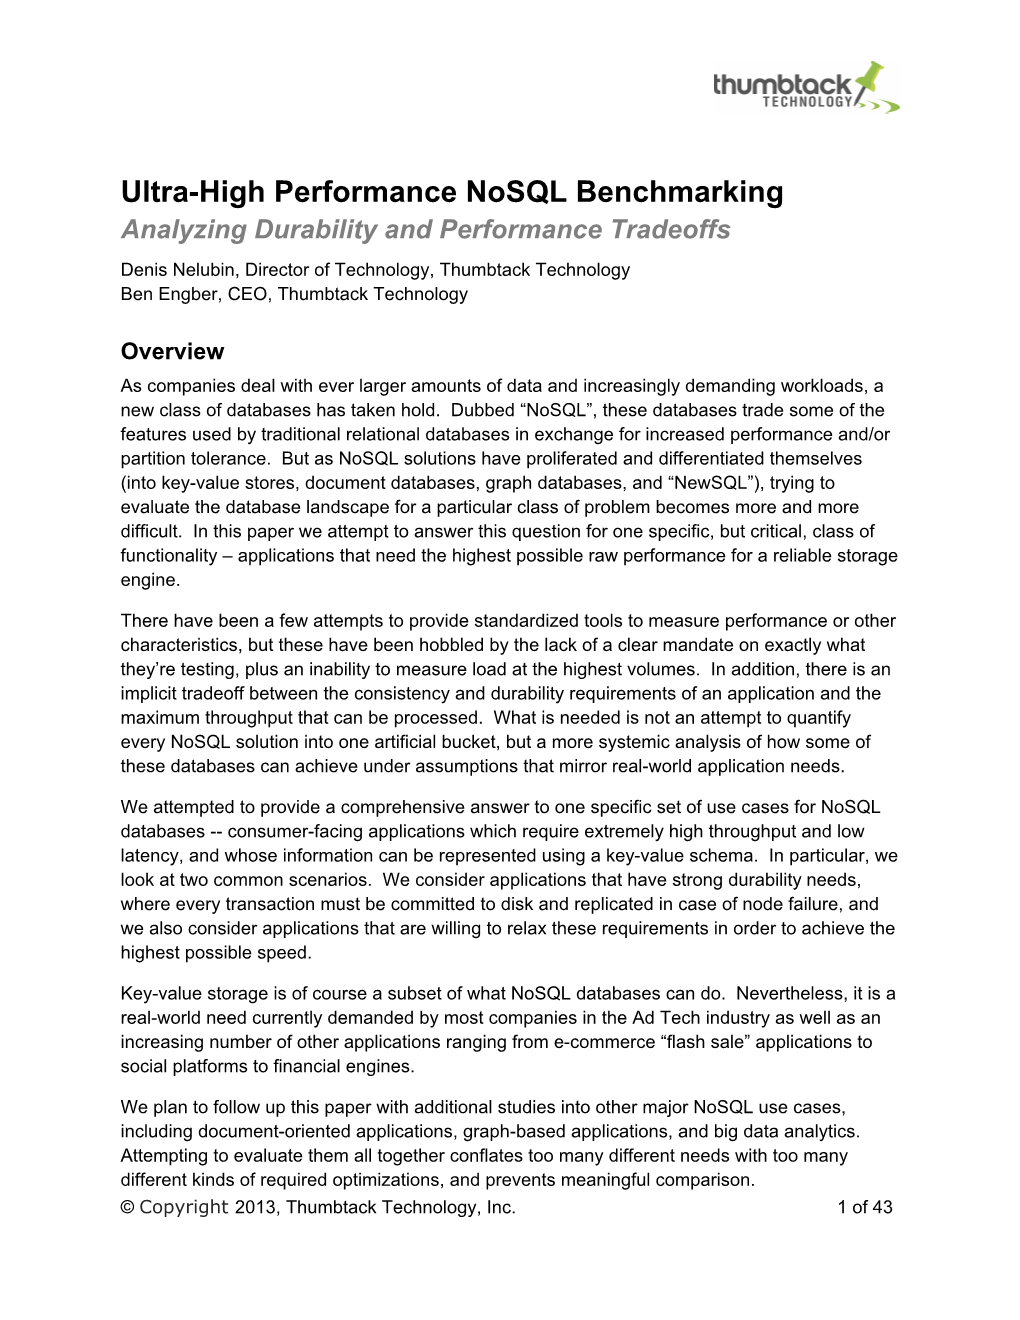 Ultra-High Performance Nosql Benchmarking